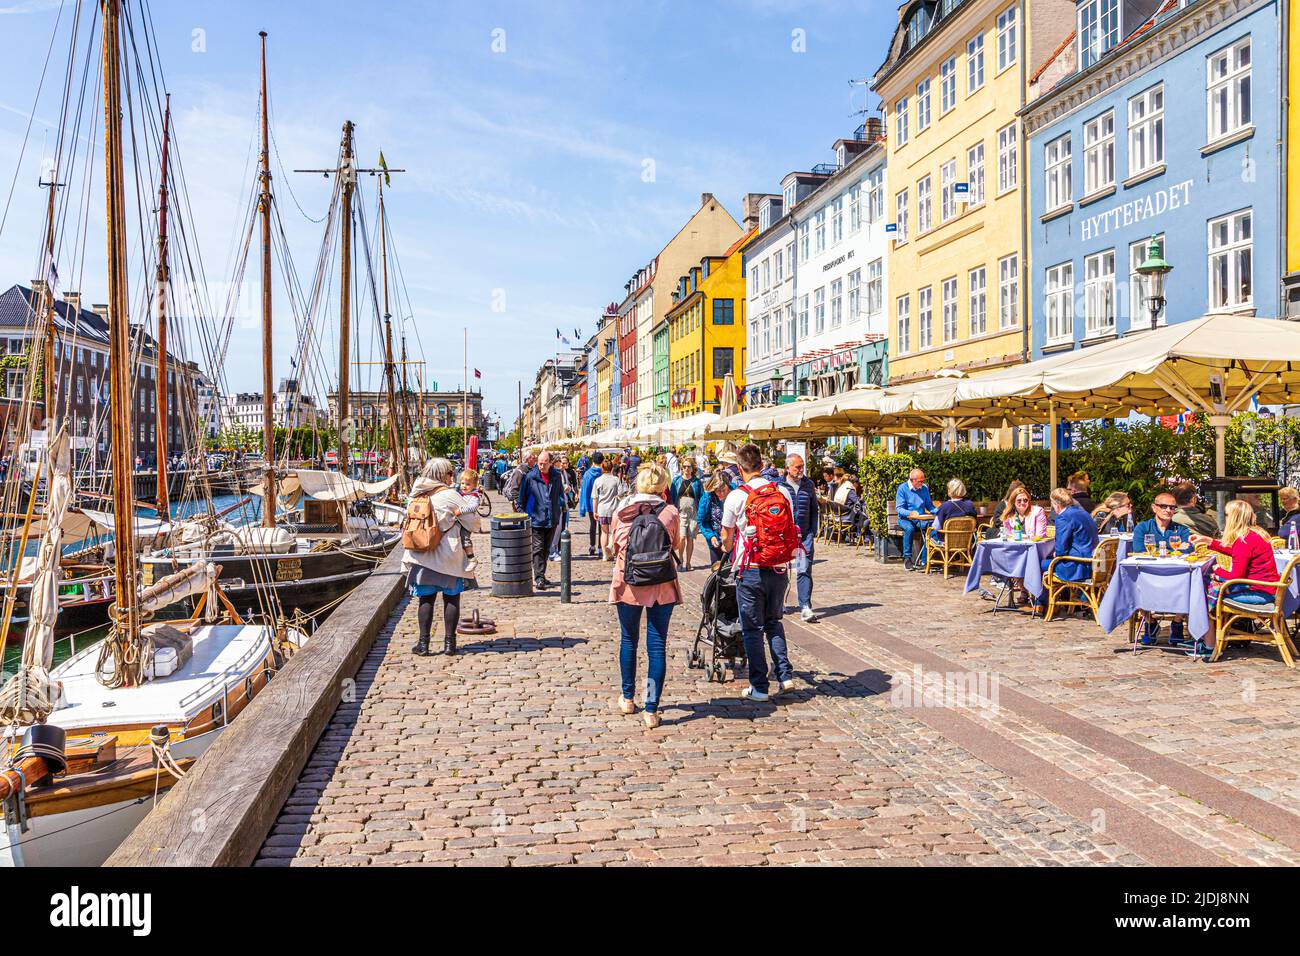 Cafés im Freien in Nyhavn, der farbenfrohen 17.-Jahrhundert-Kanalpromenade in Kopenhagen, Dänemark. Stockfoto